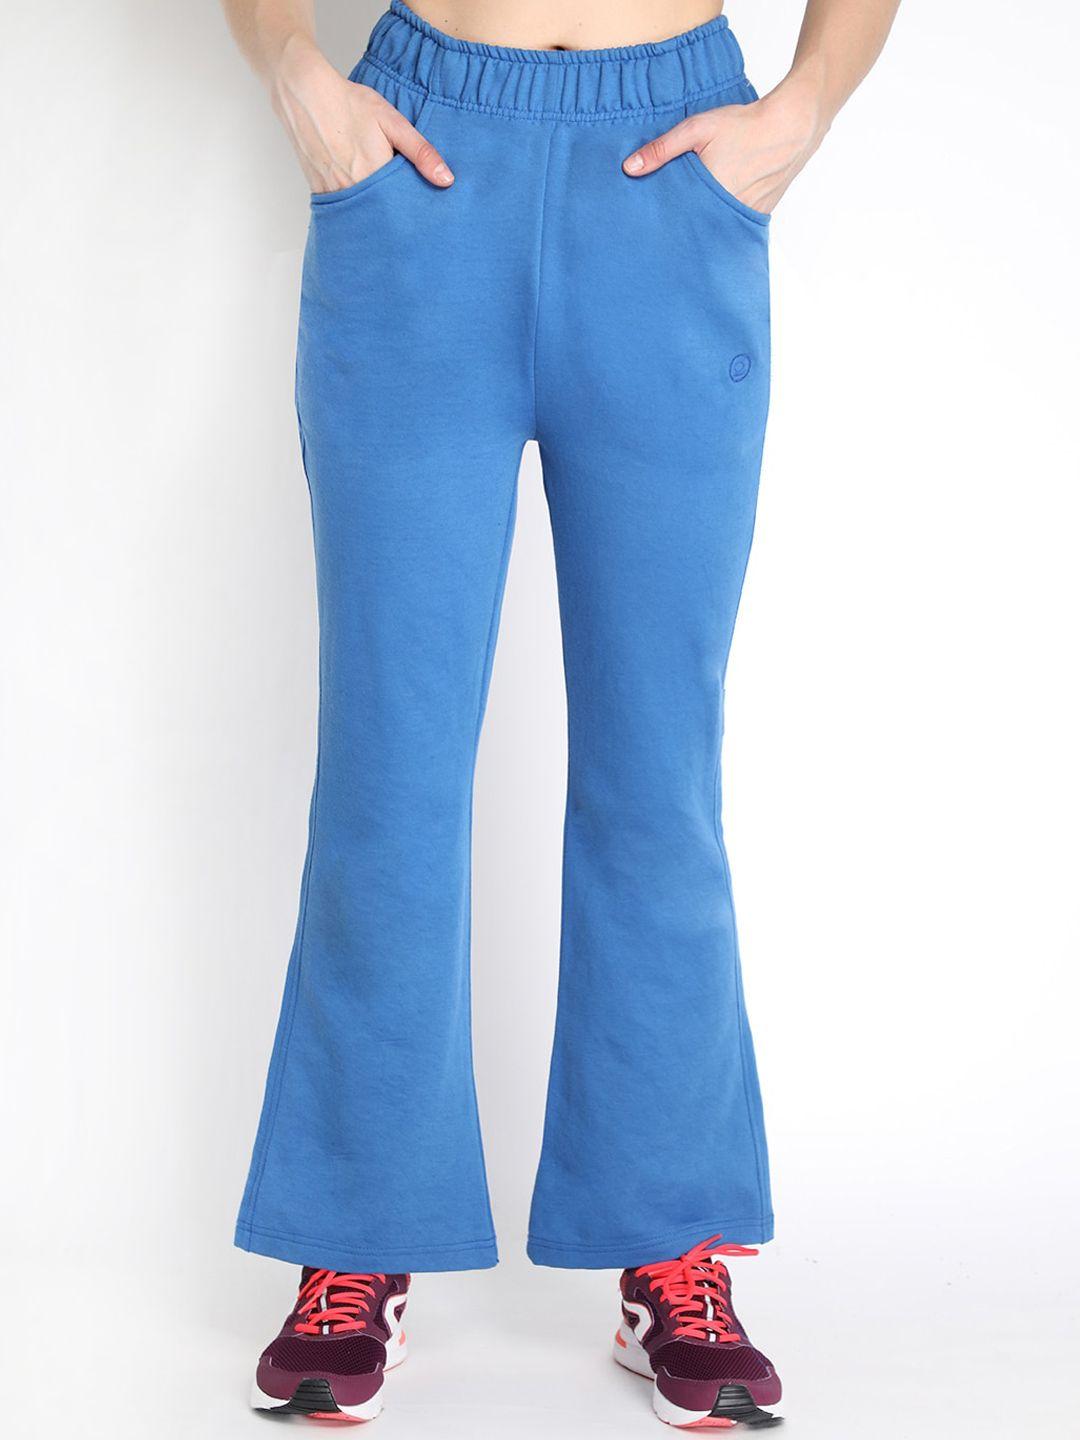 chkokko women blue solid bootcut track pants